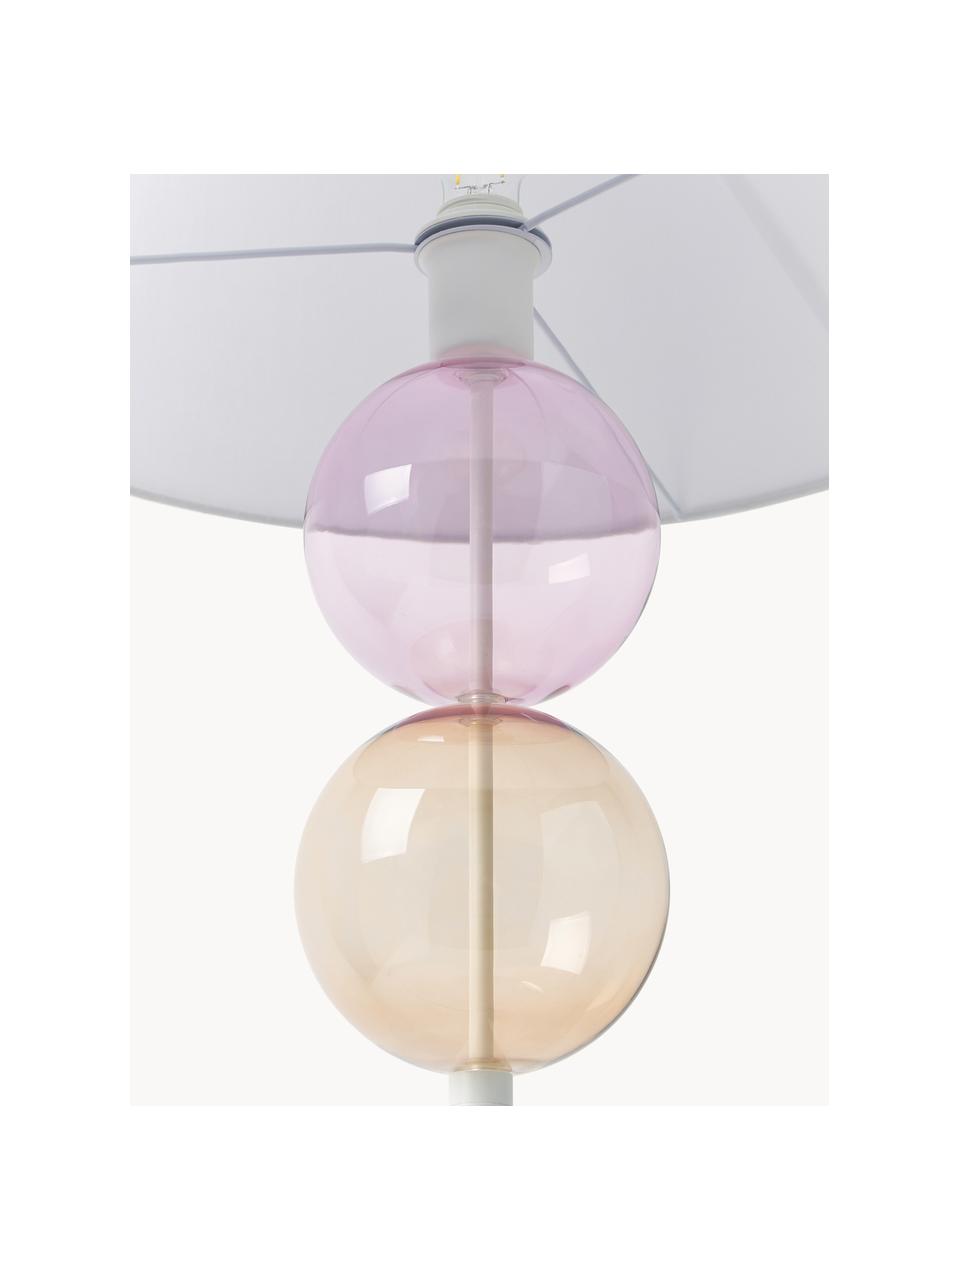 Vloerlamp Aglaia met glazen bollen, Lampenkap: linnen (100% polyester), Wit, lichtbruin, roze, H 155cm